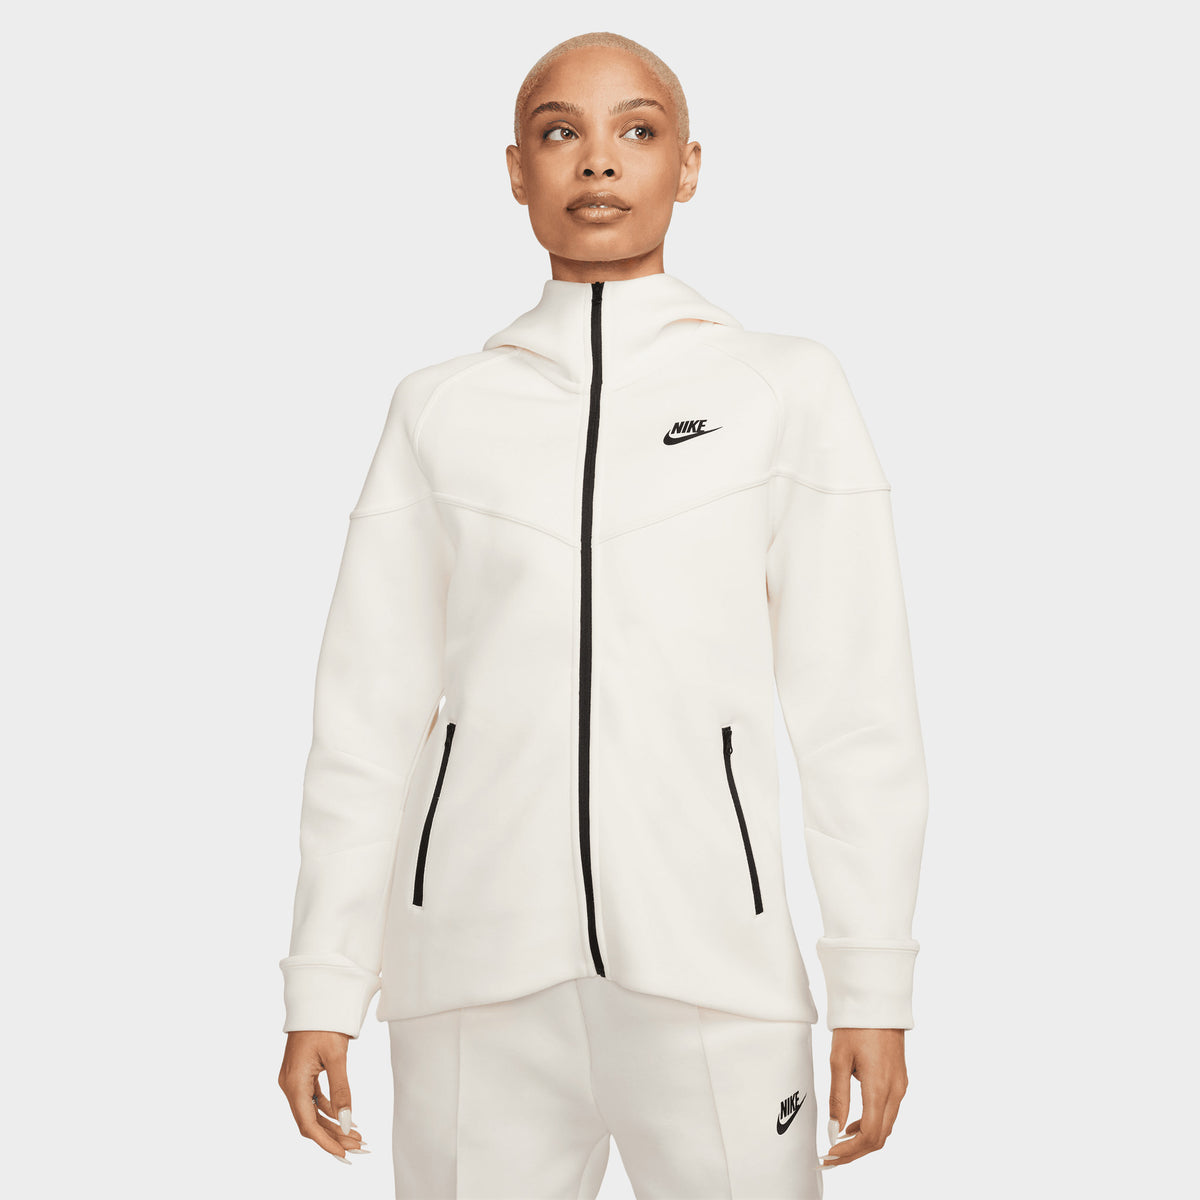 NWT Women's Nike Sportswear Nike Air Fleece Hoodie Plus Size 1X